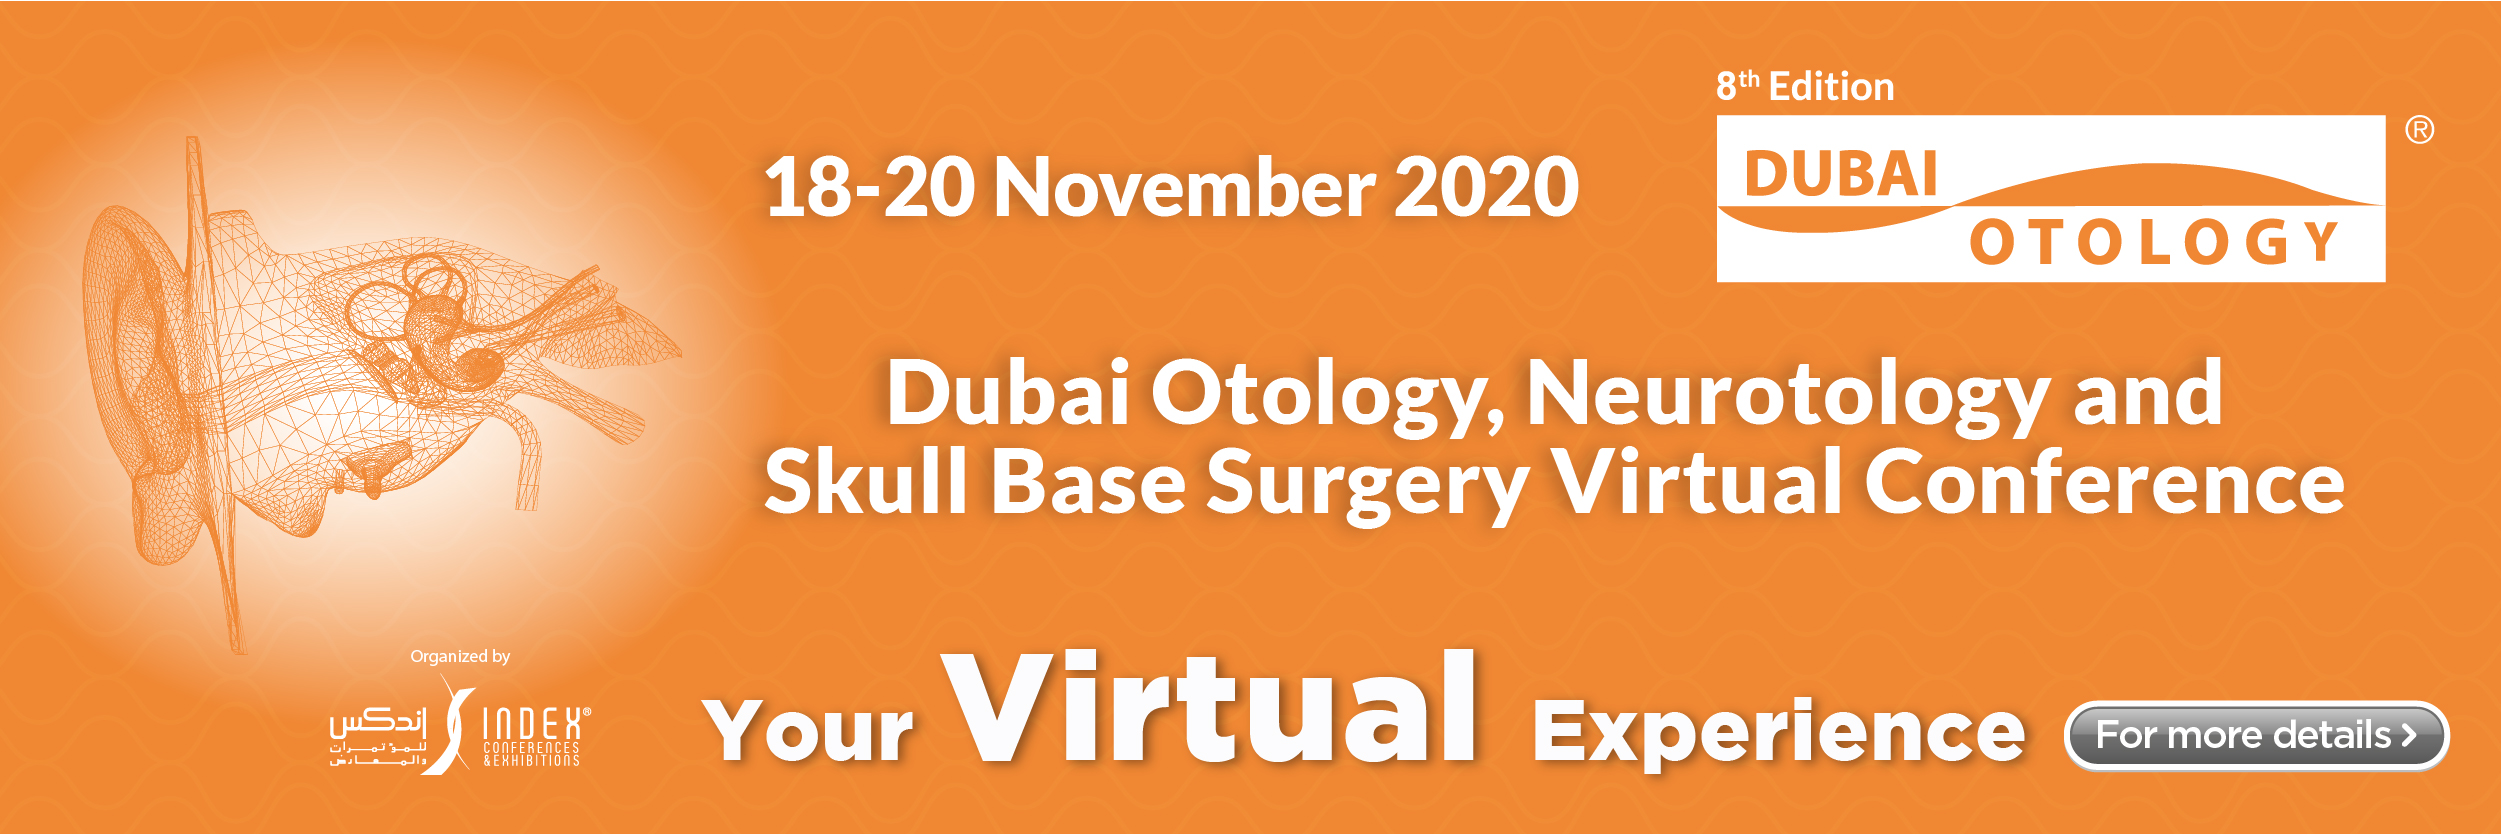 Otology Virtual Conference Web Banner